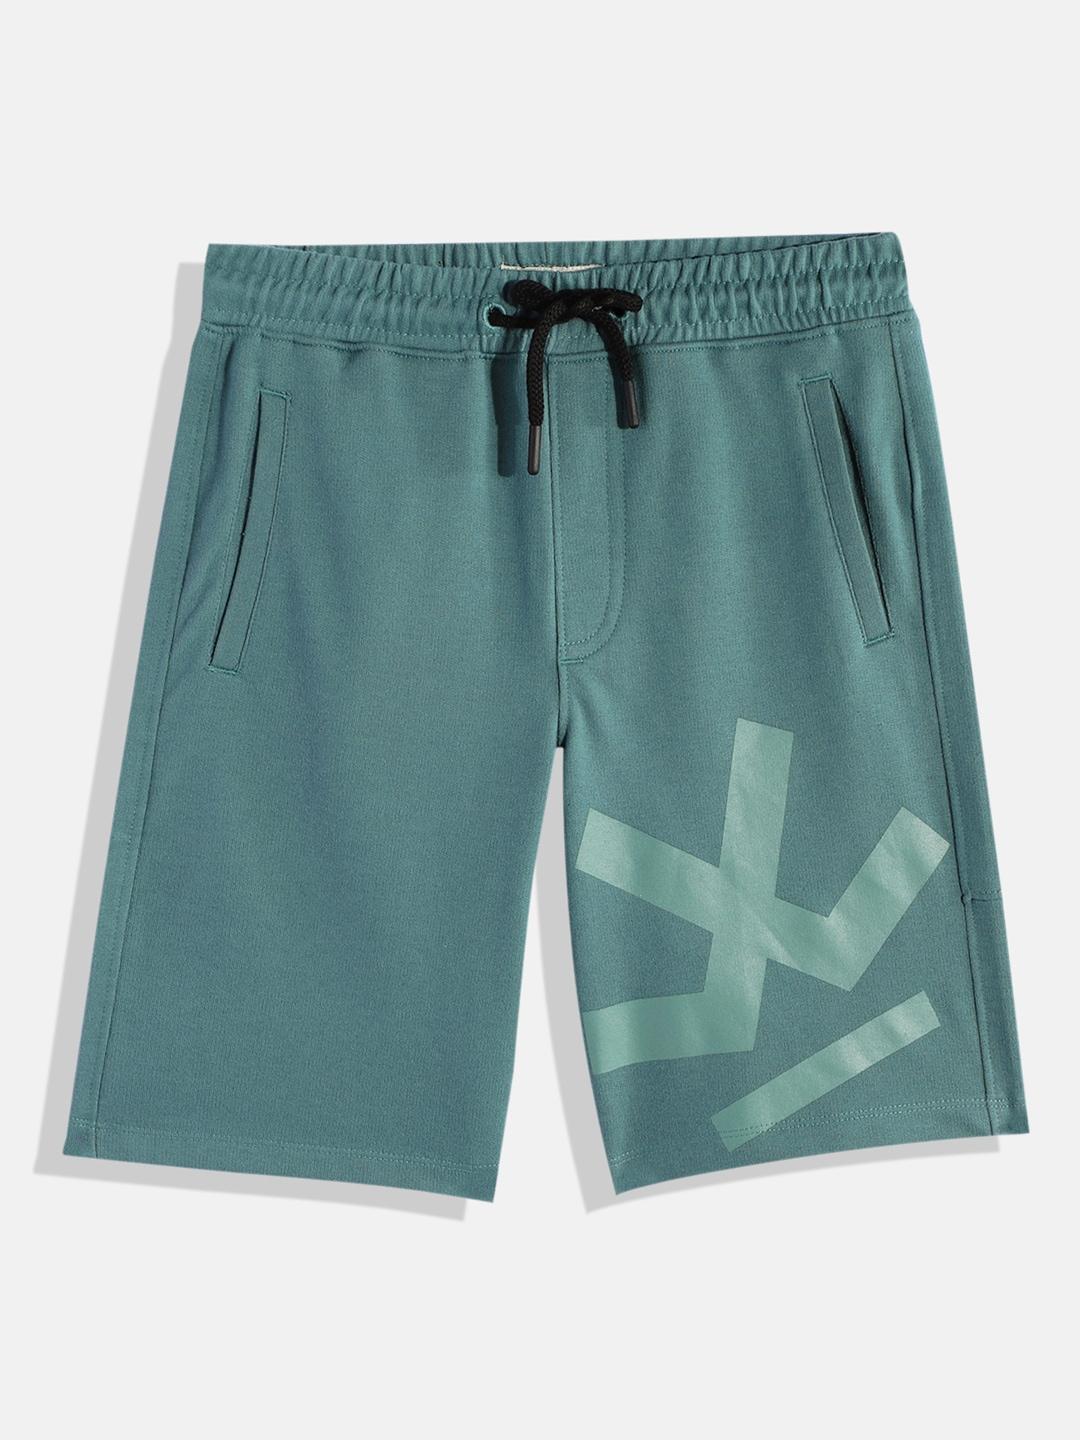 wrogn youth boys teal green brand logo printed shorts